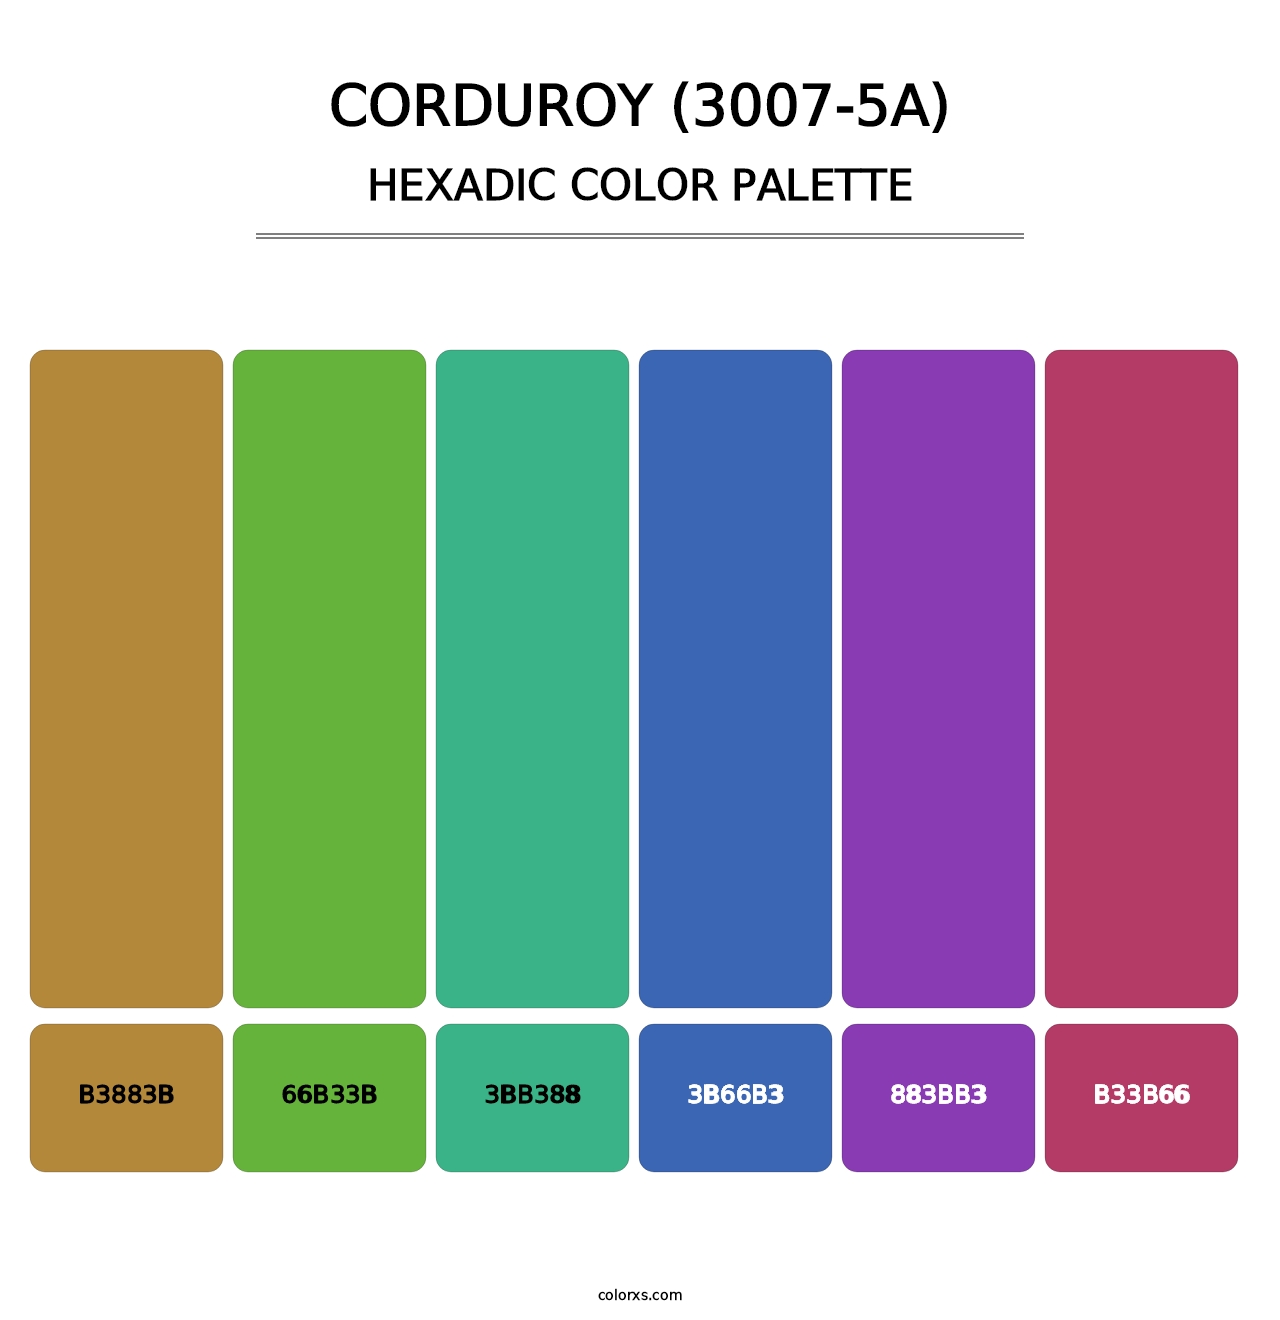 Corduroy (3007-5A) - Hexadic Color Palette